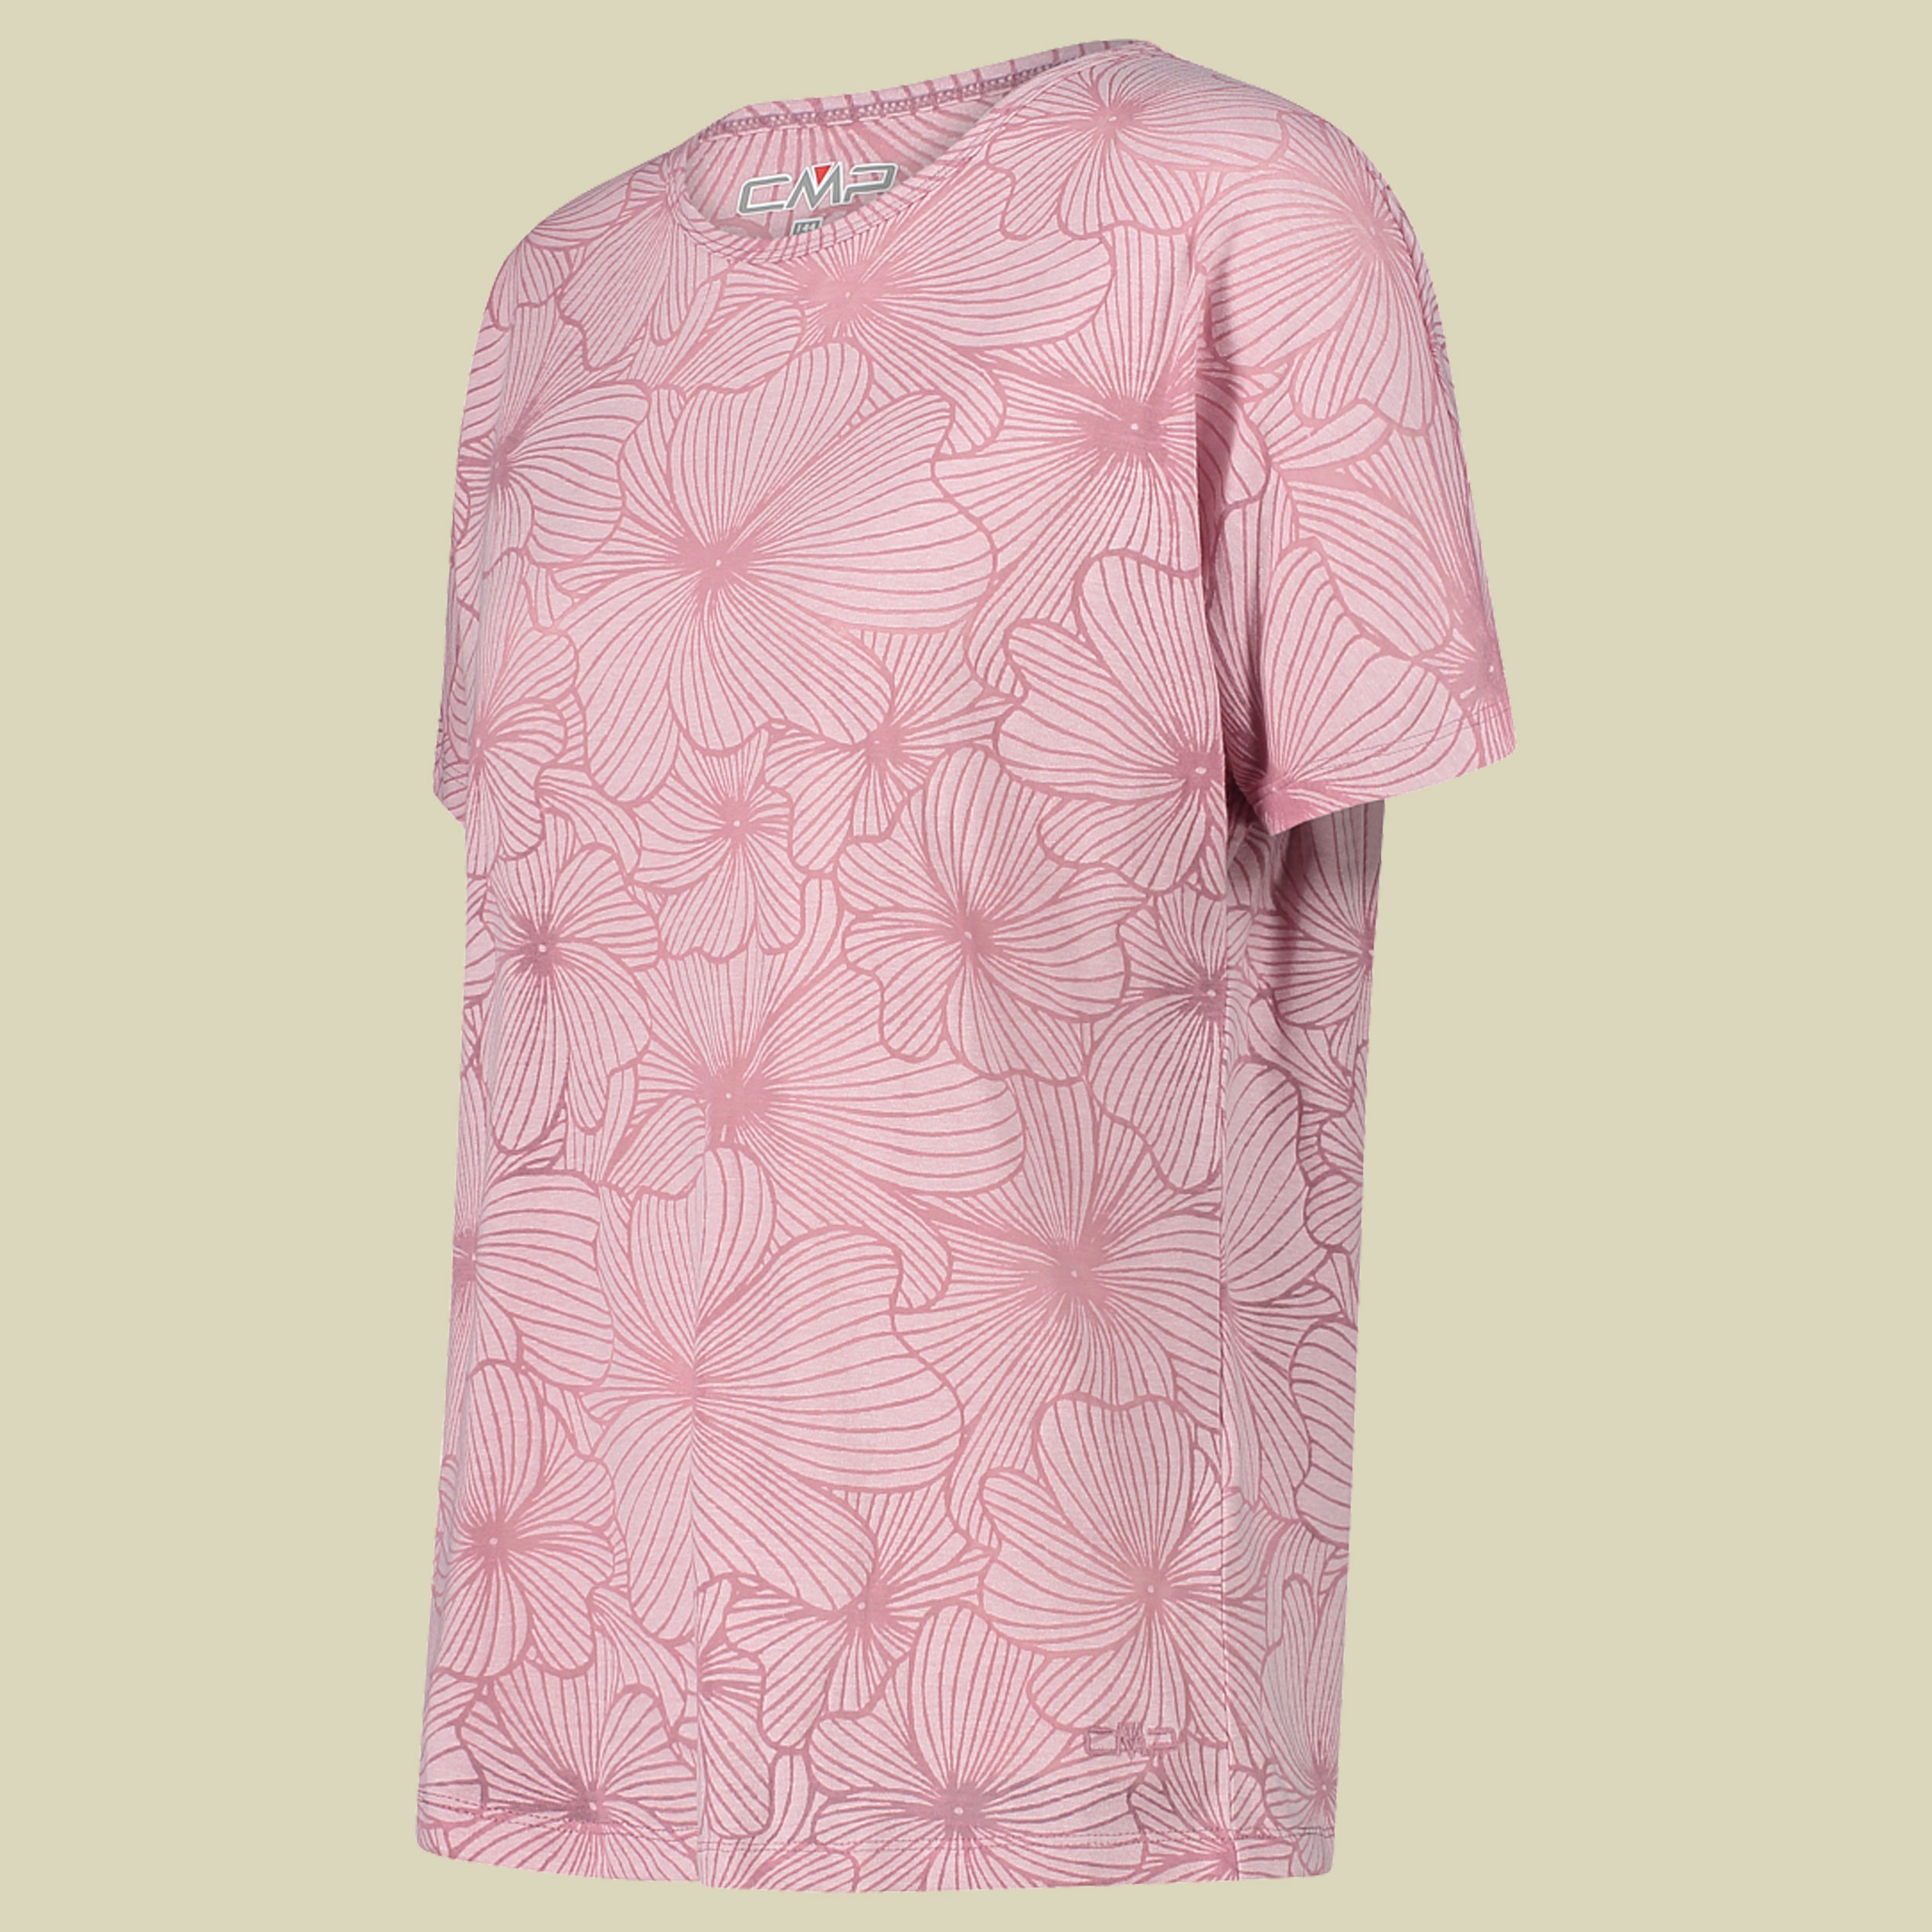 Woman T-Shirt Burn Out Jersey 33N7976 Größe 44 Farbe C602fard